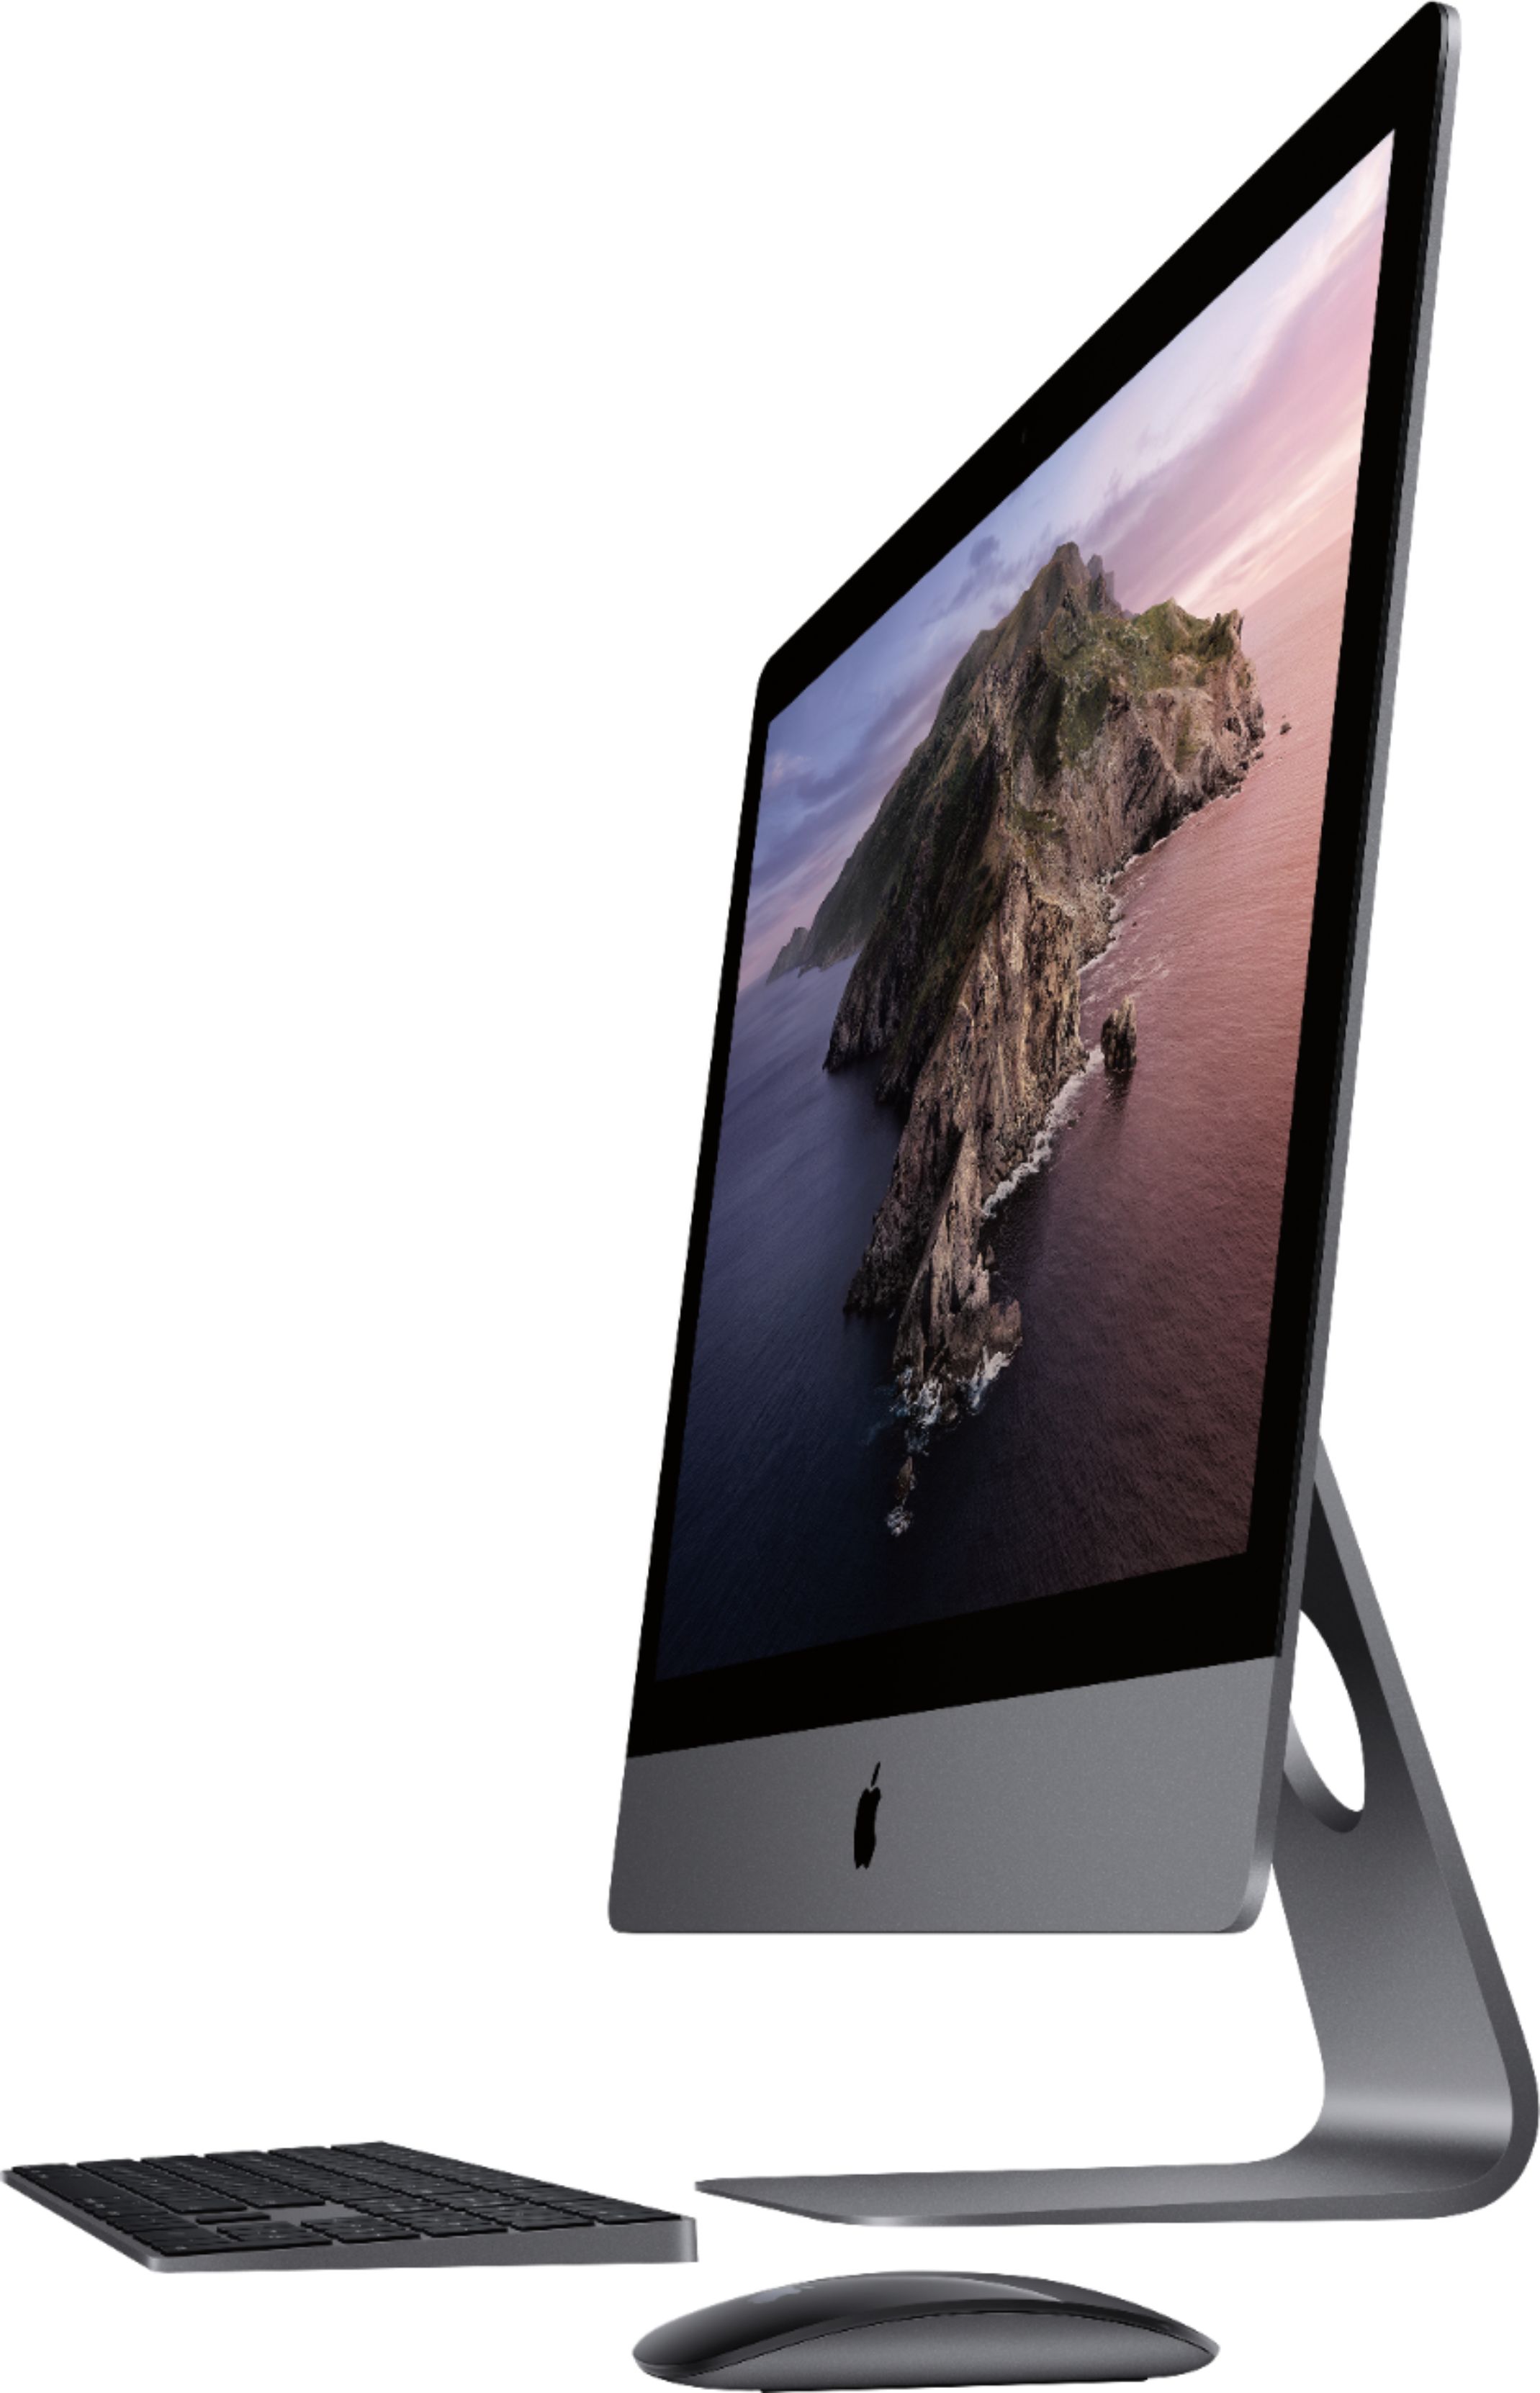 Left View: Apple - 27" iMac Pro with Retina 5K display - Intel Xeon W - 32GB Memory - 1TB Solid State Drive - Black